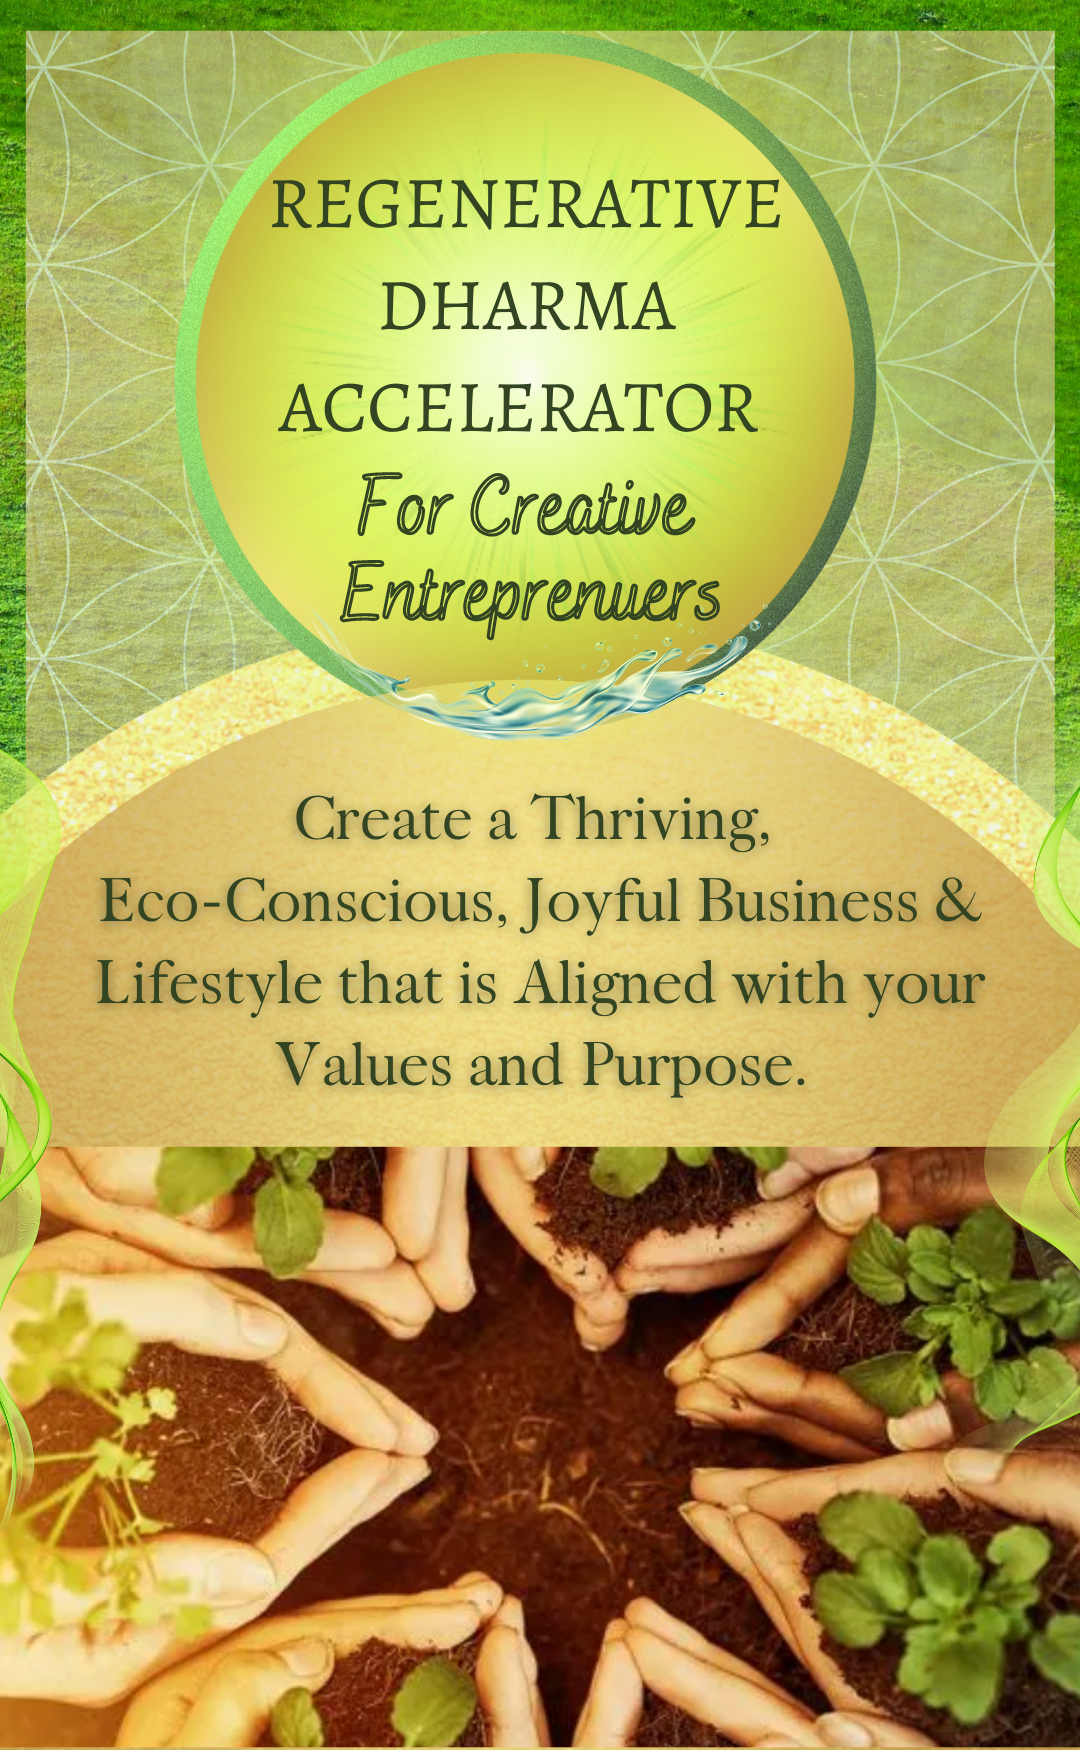 Regenerative Dharma Accelerator for Creative Entrepreneurs